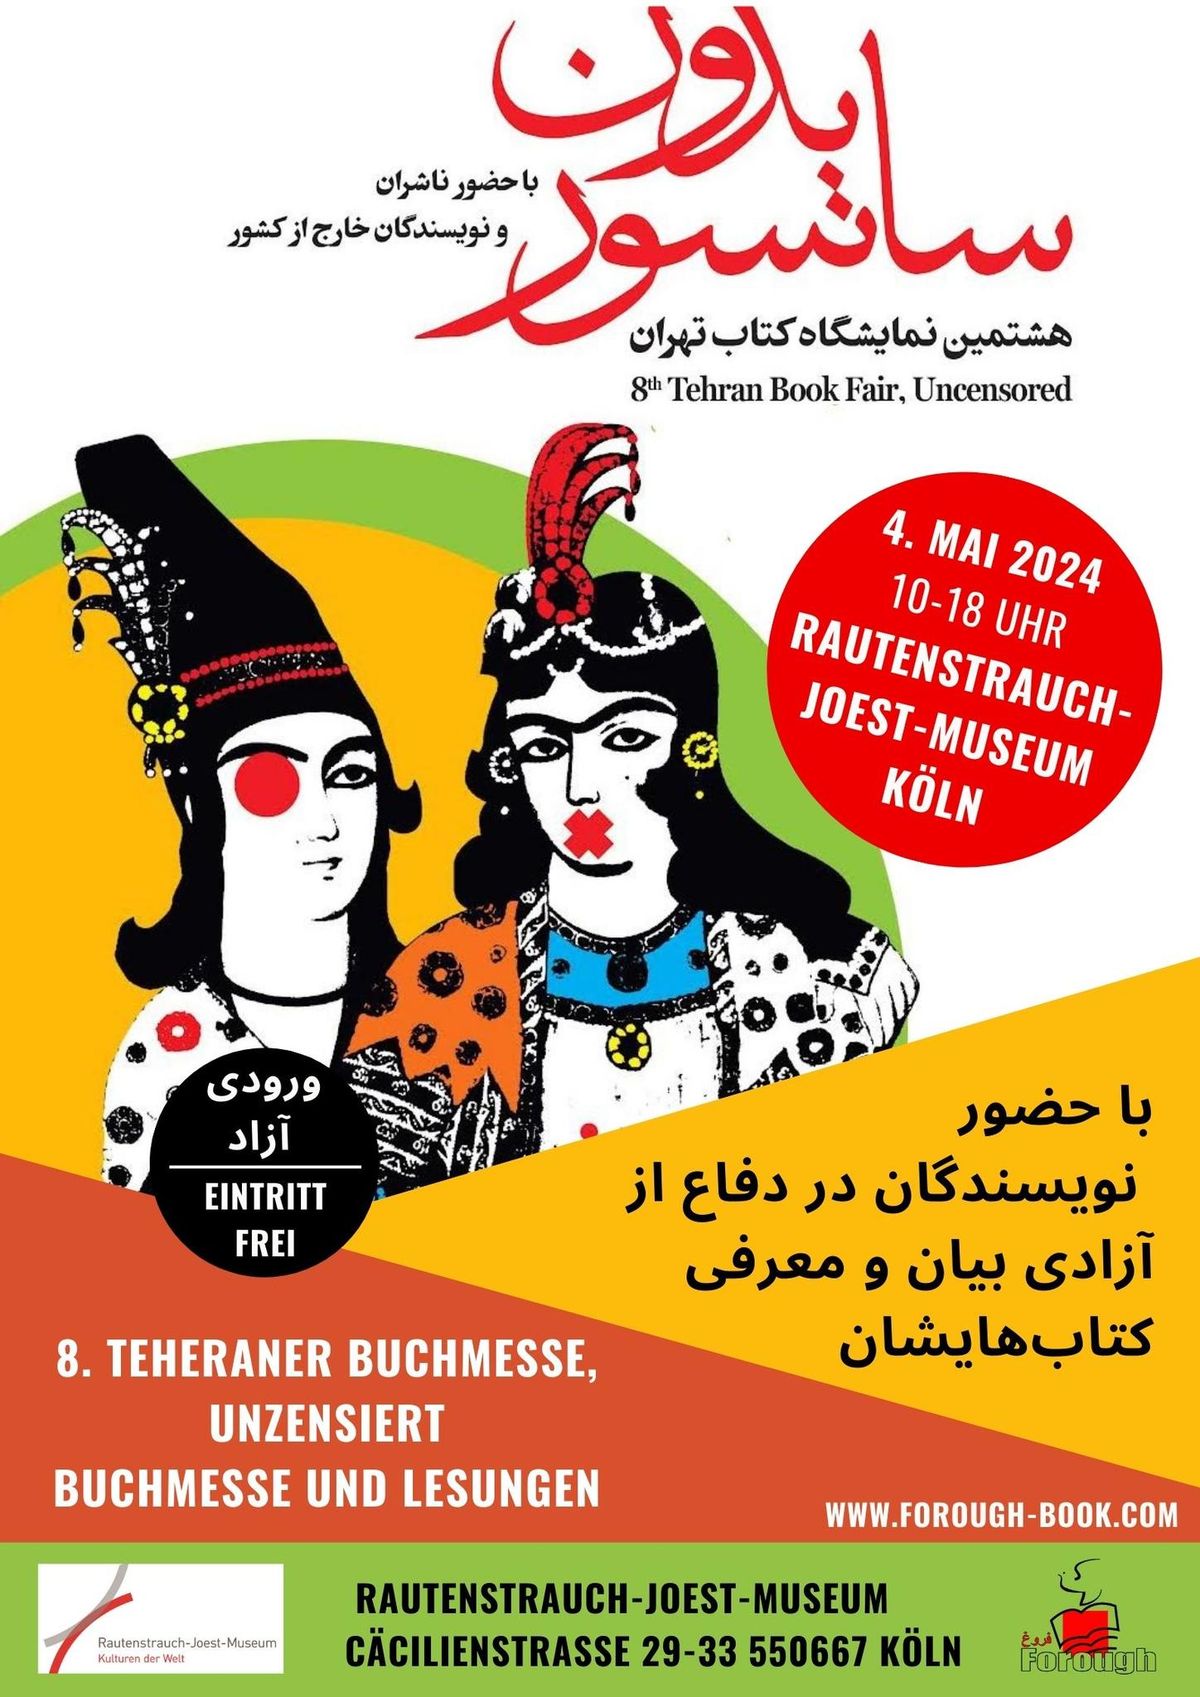 8. Teheraner Buchmesse UNZENSIERT